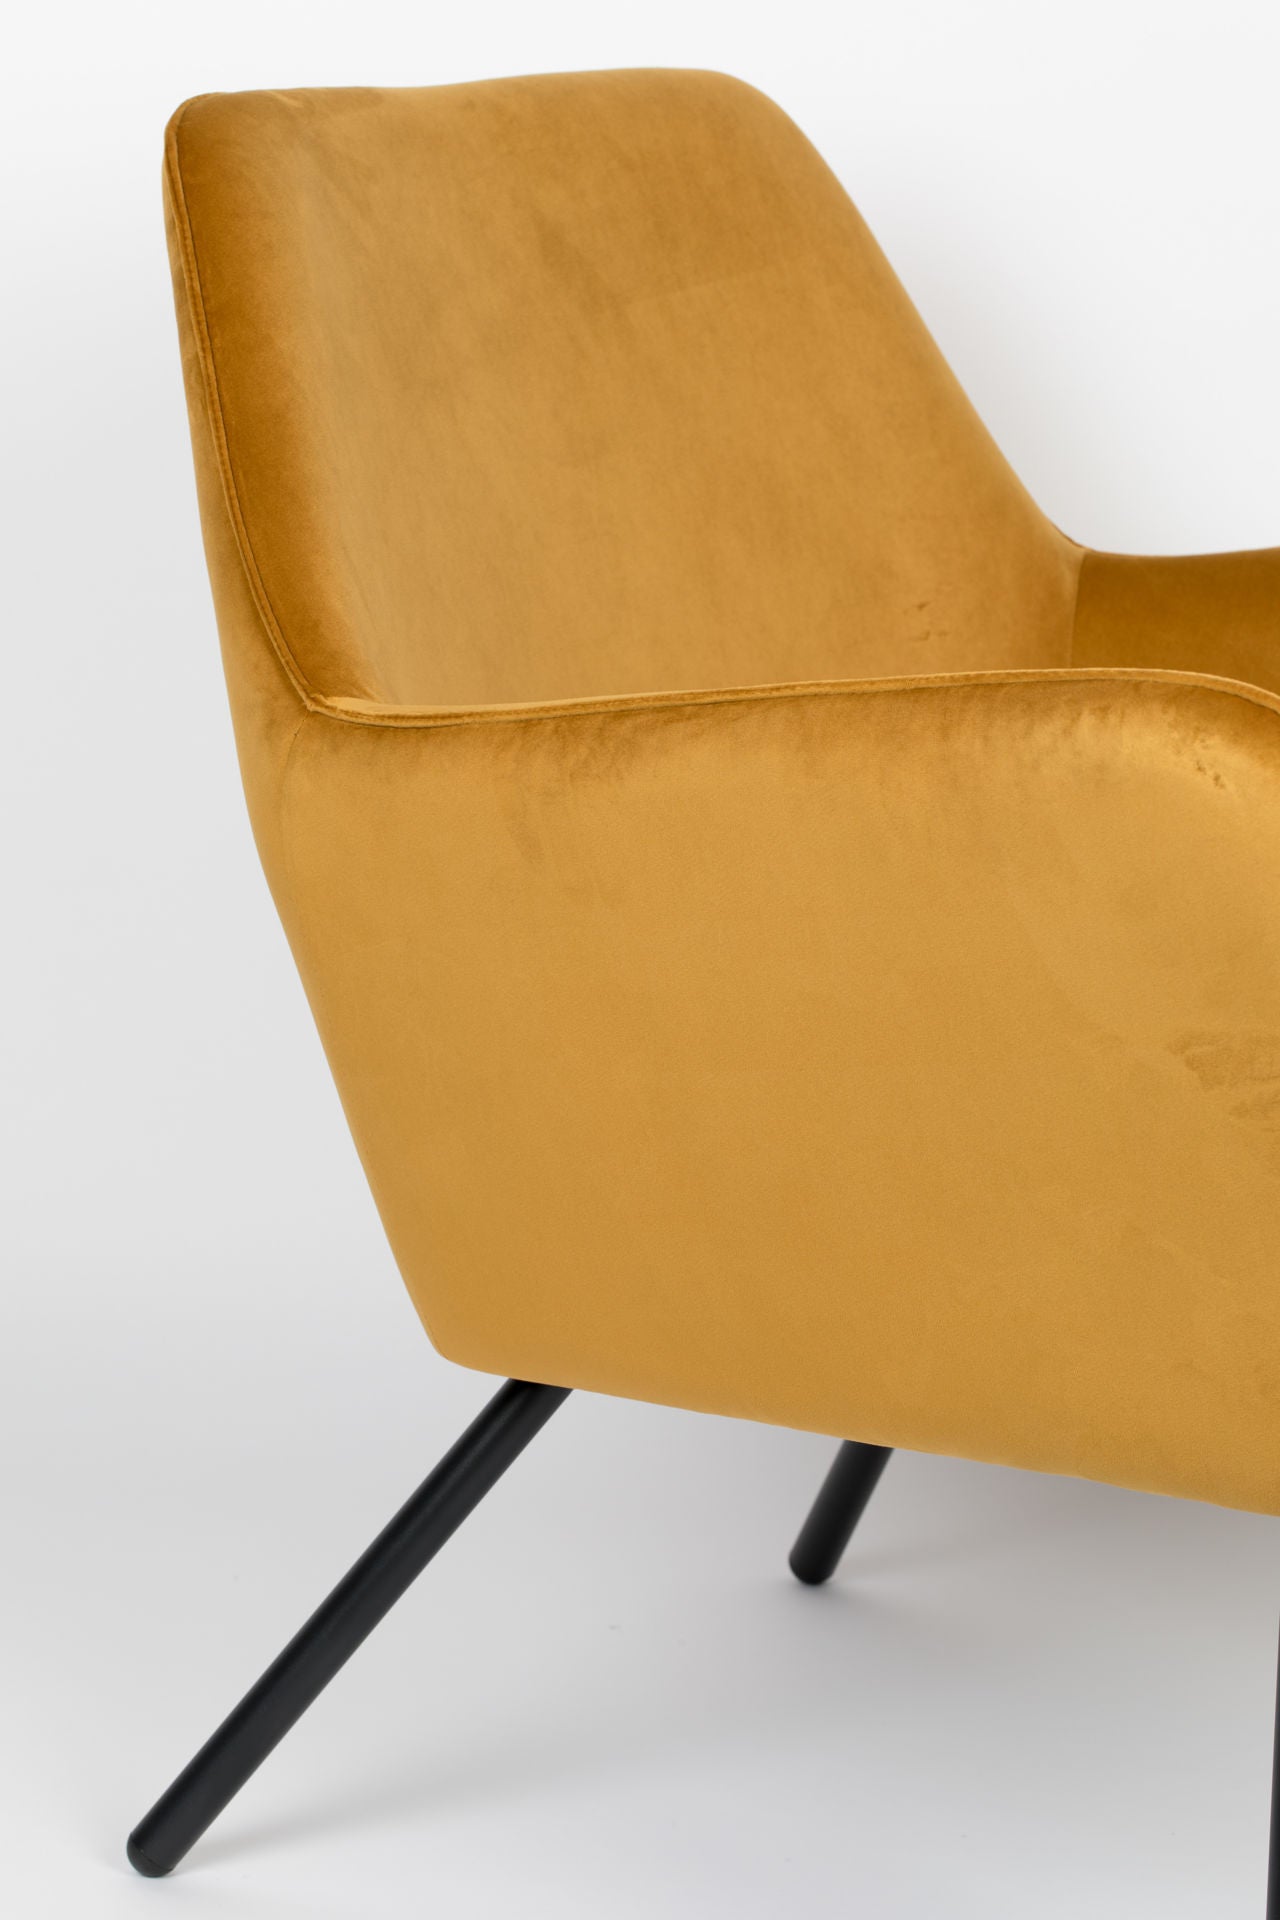 Nancy's Tomball Lounge Chair - Industriel - Or- Velours, Fer, Contreplaqué - 76 cm x 80 cm x 78 cm